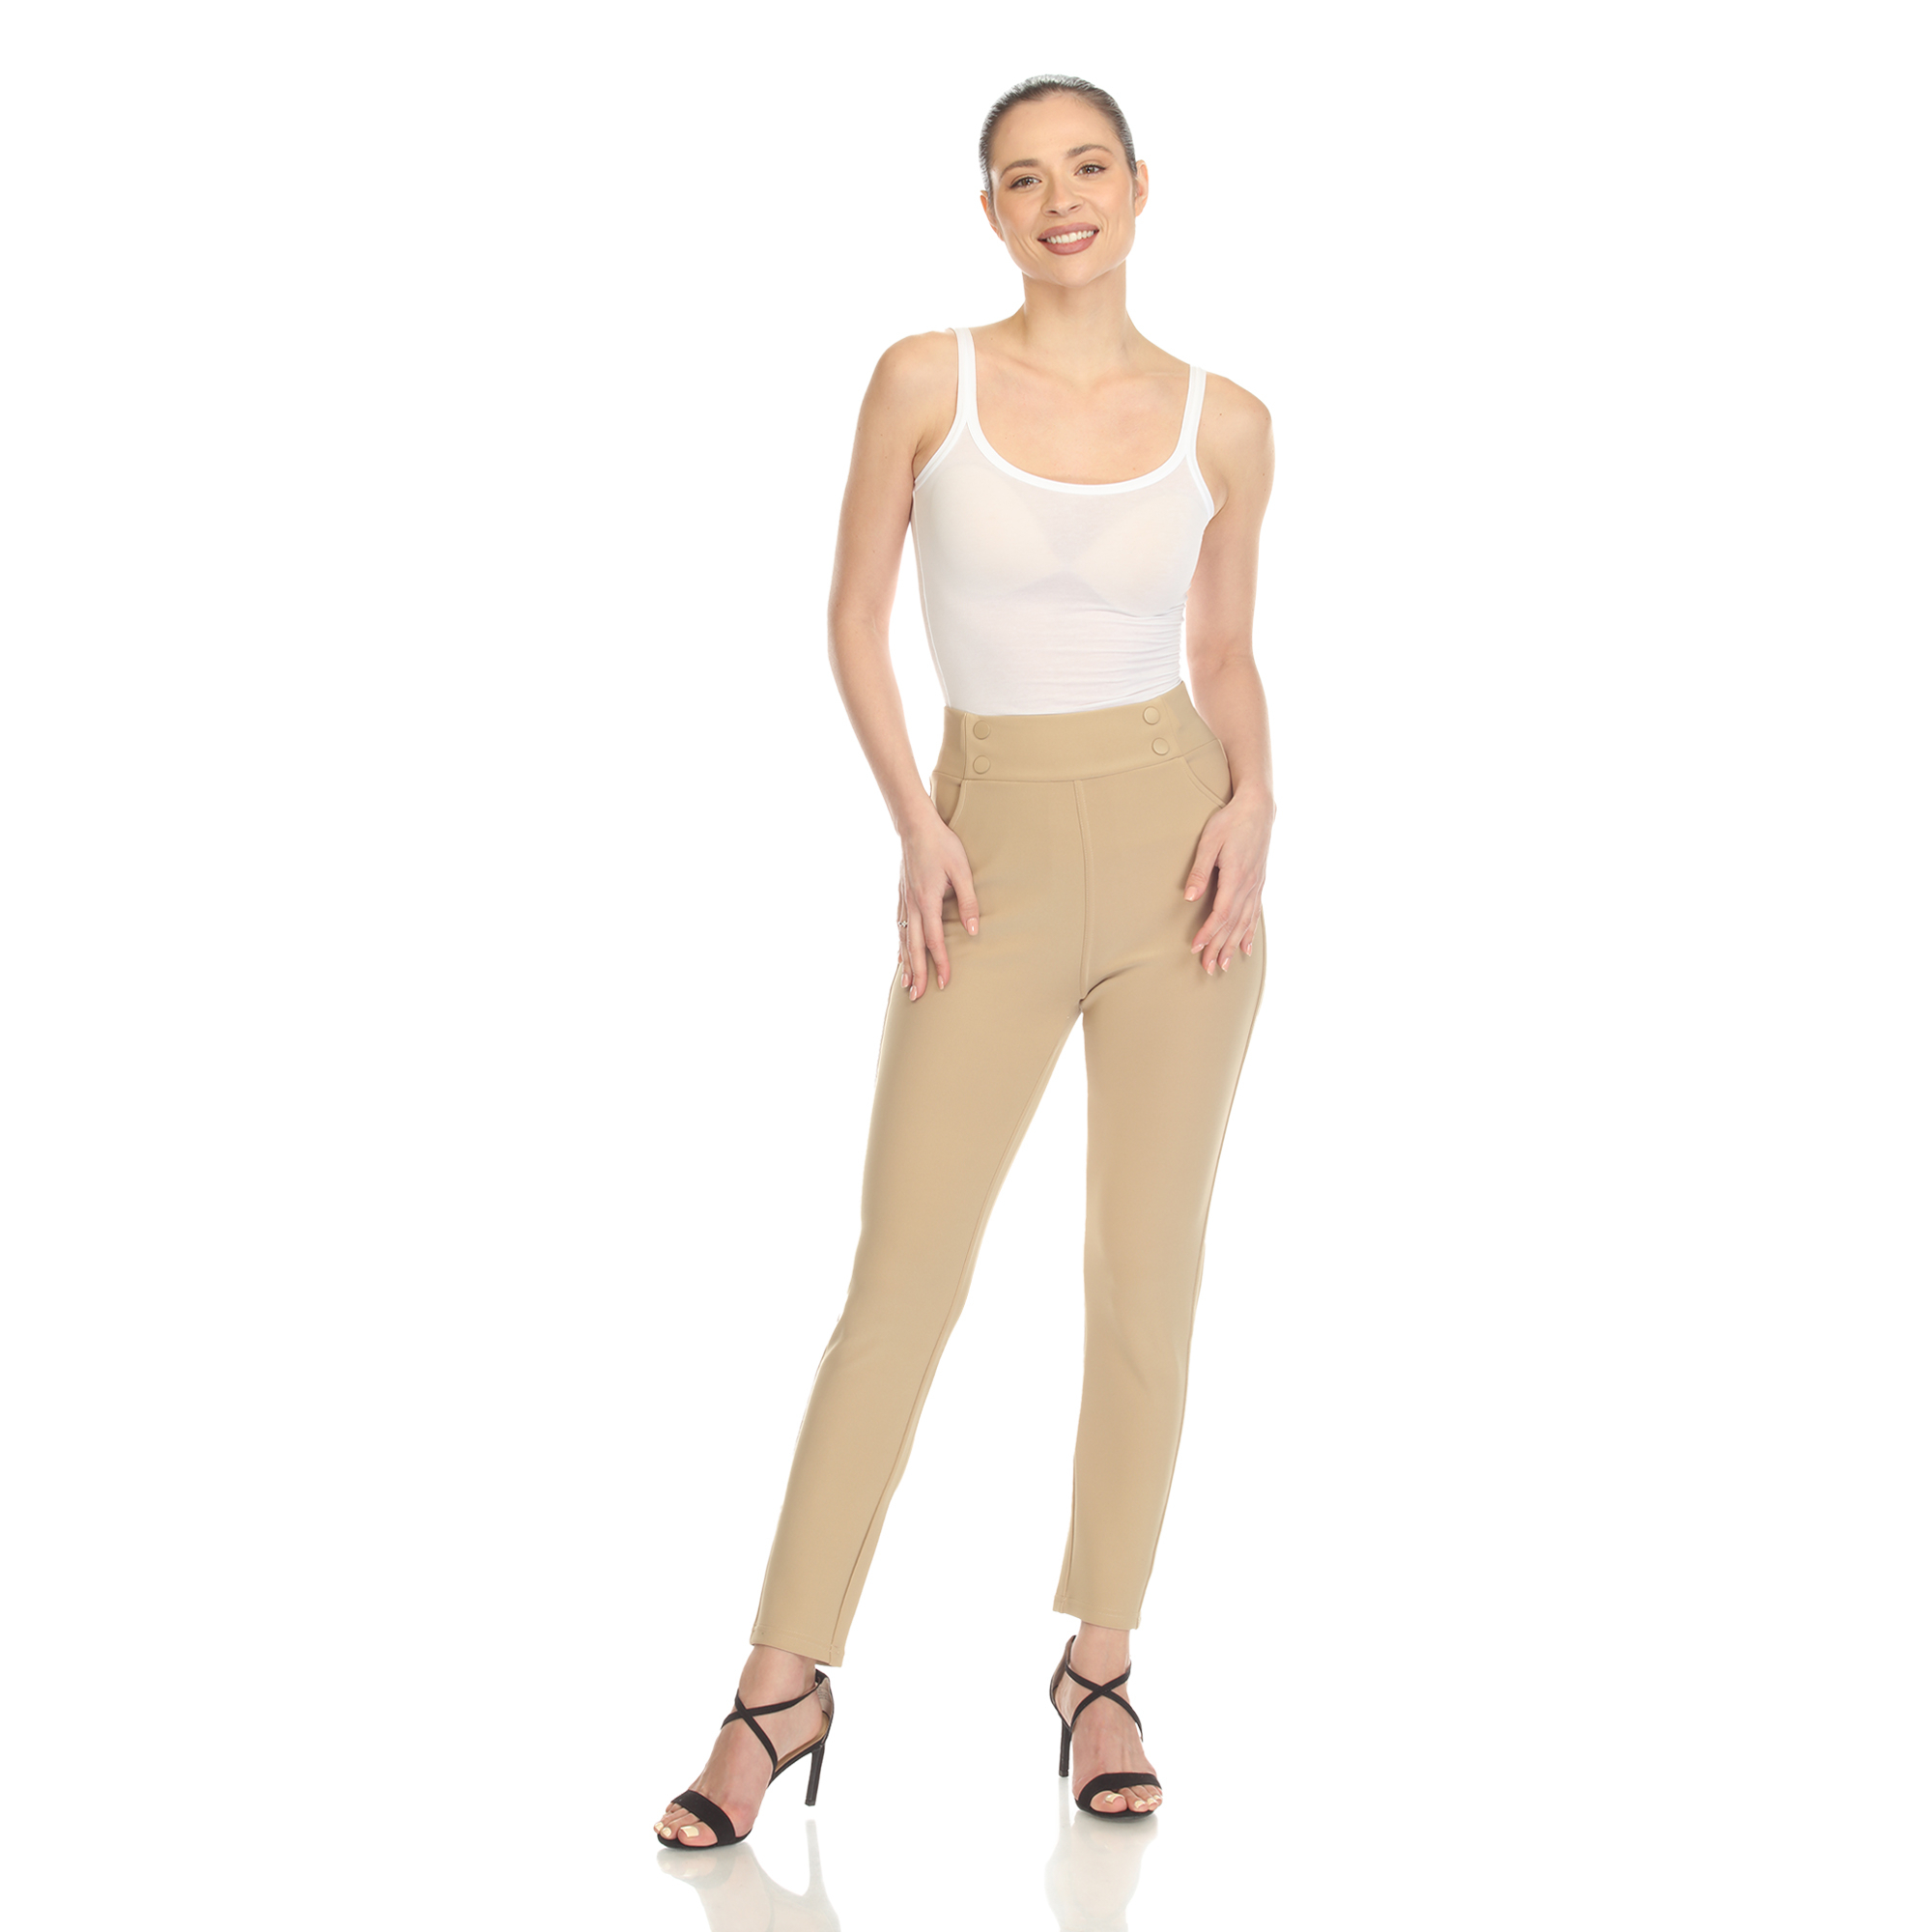 White Mark Women's Super Soft Elastic Waistband High Waist Scuba Pants With Pockets - Beige, 2X